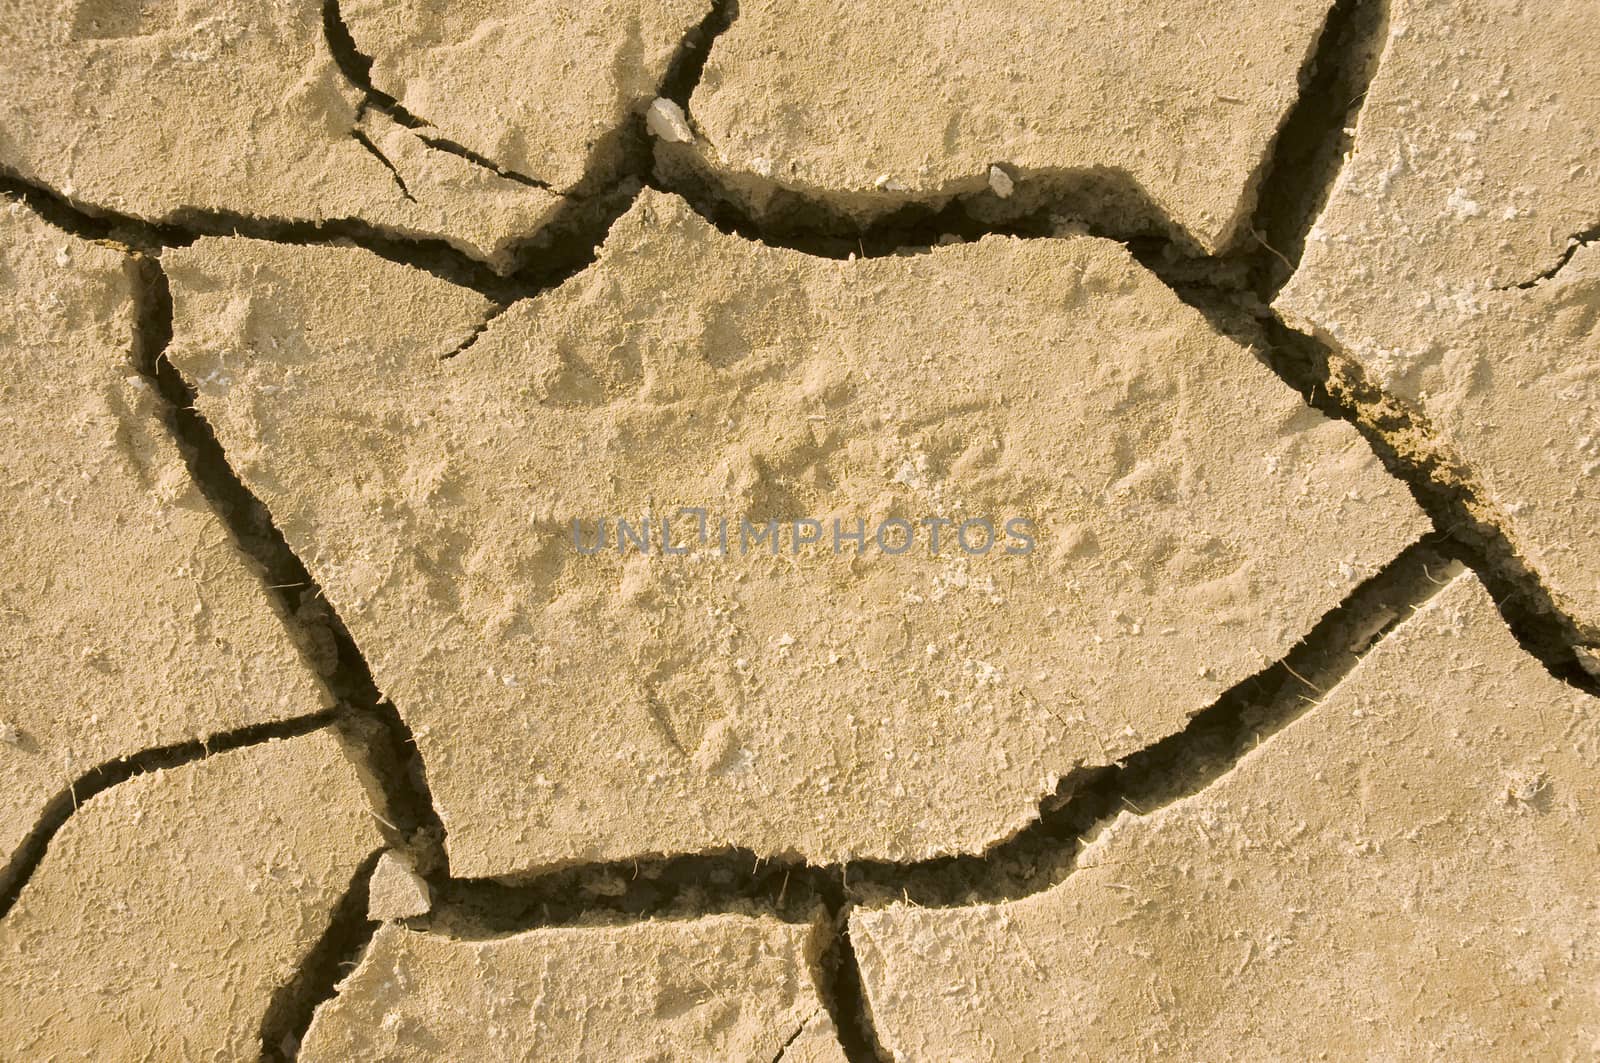 Animal footprints in dried earth by Digifoodstock